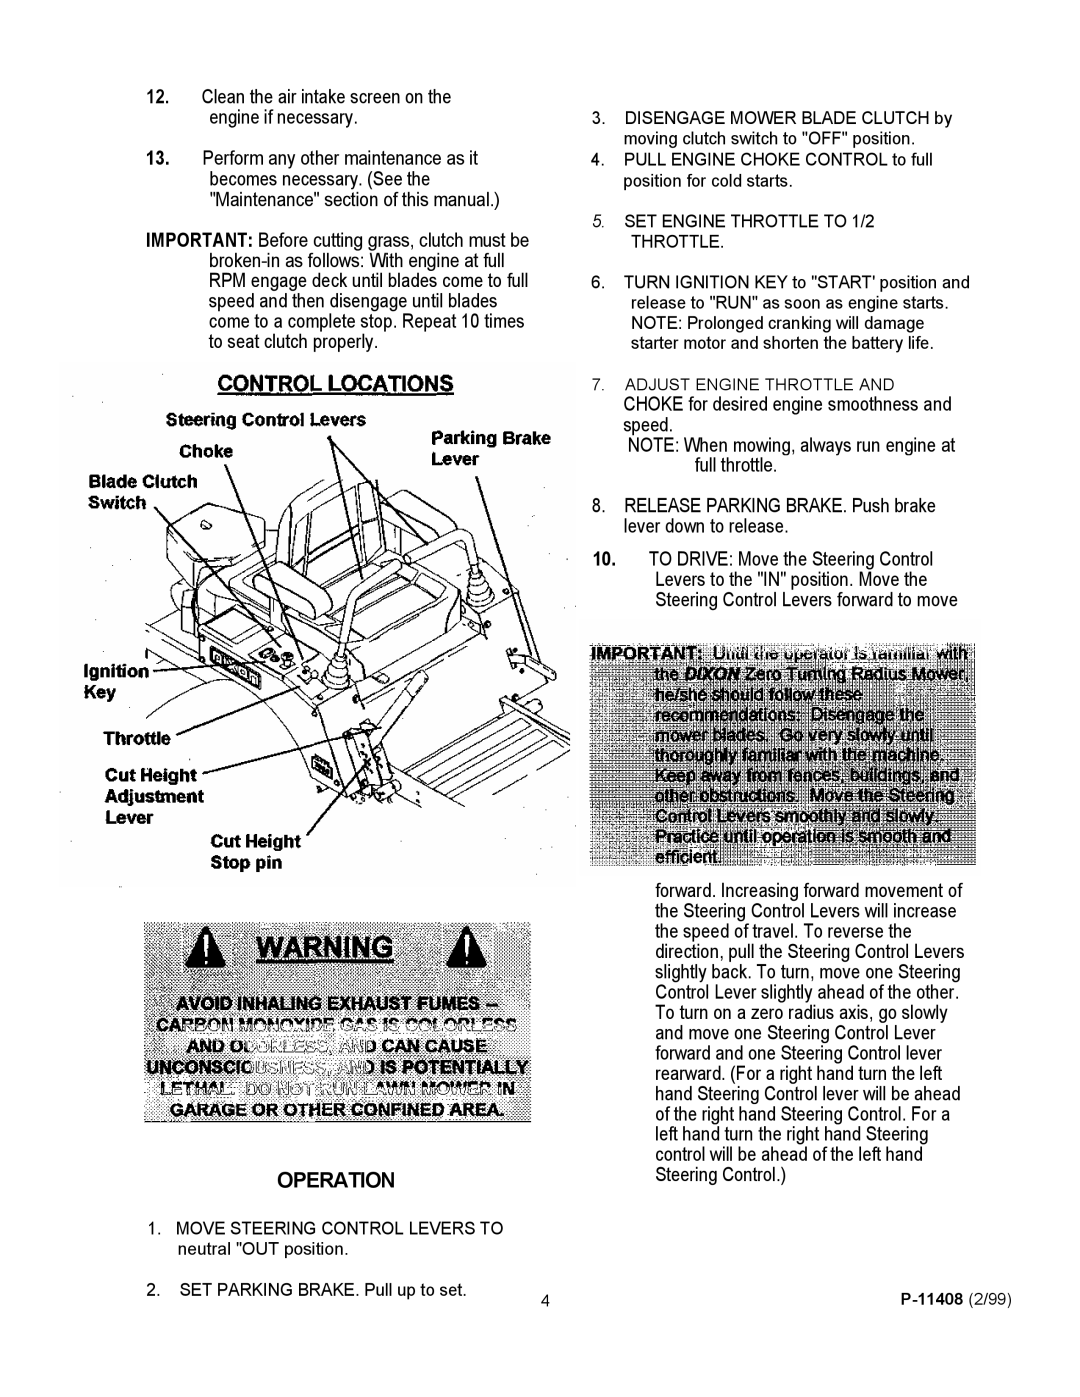 Dixon 700 Series manual Operation 